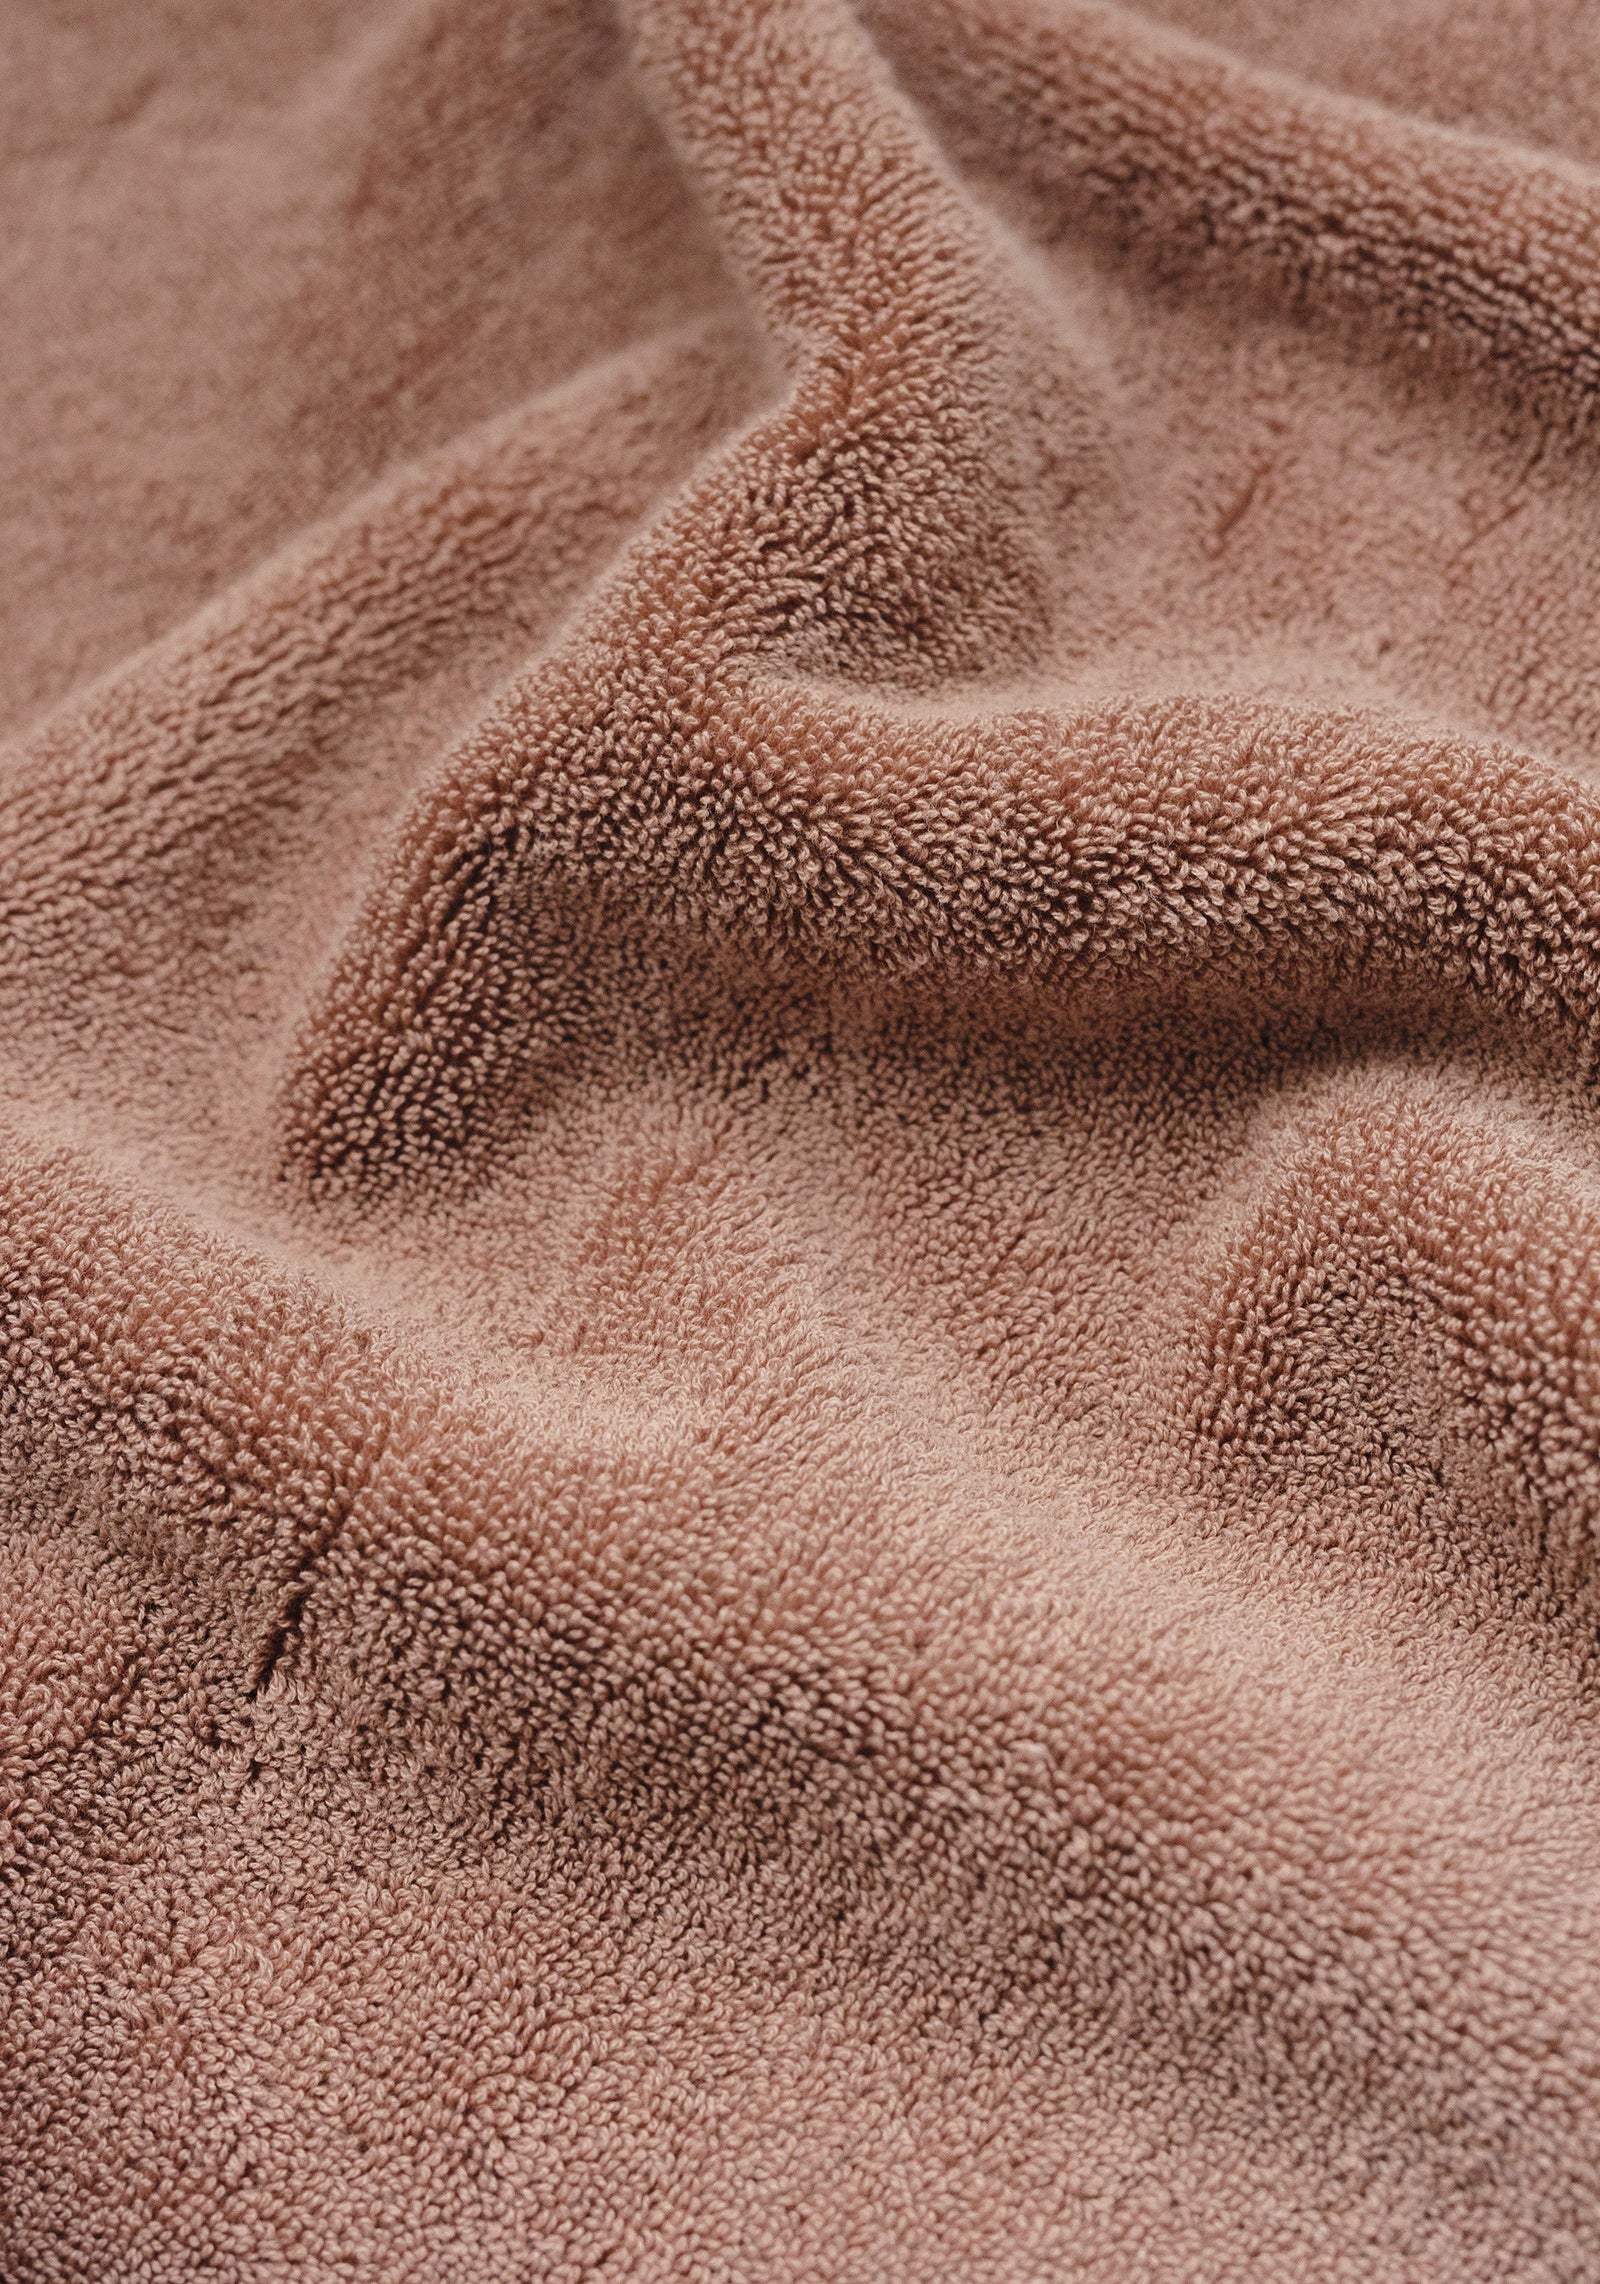 Premium Plush Bath Towel in the color Clay. Photo of Clay Premium Plush Bath Towel taken as a close up only showing the Premium Plush Bath Towel's texture 